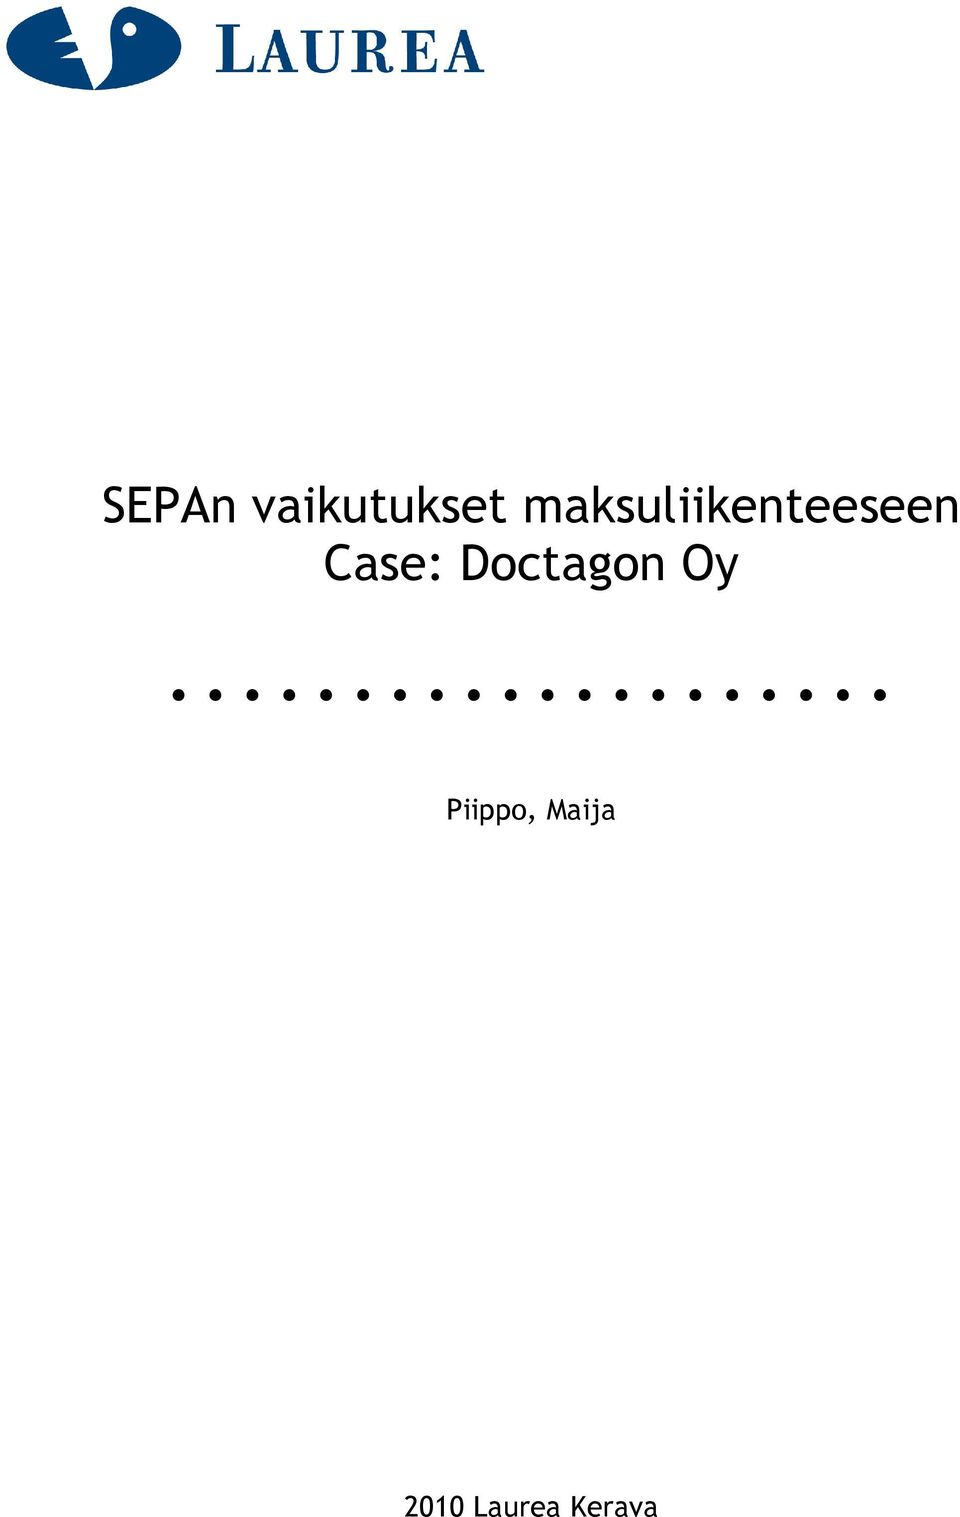 Case: Doctagon Oy